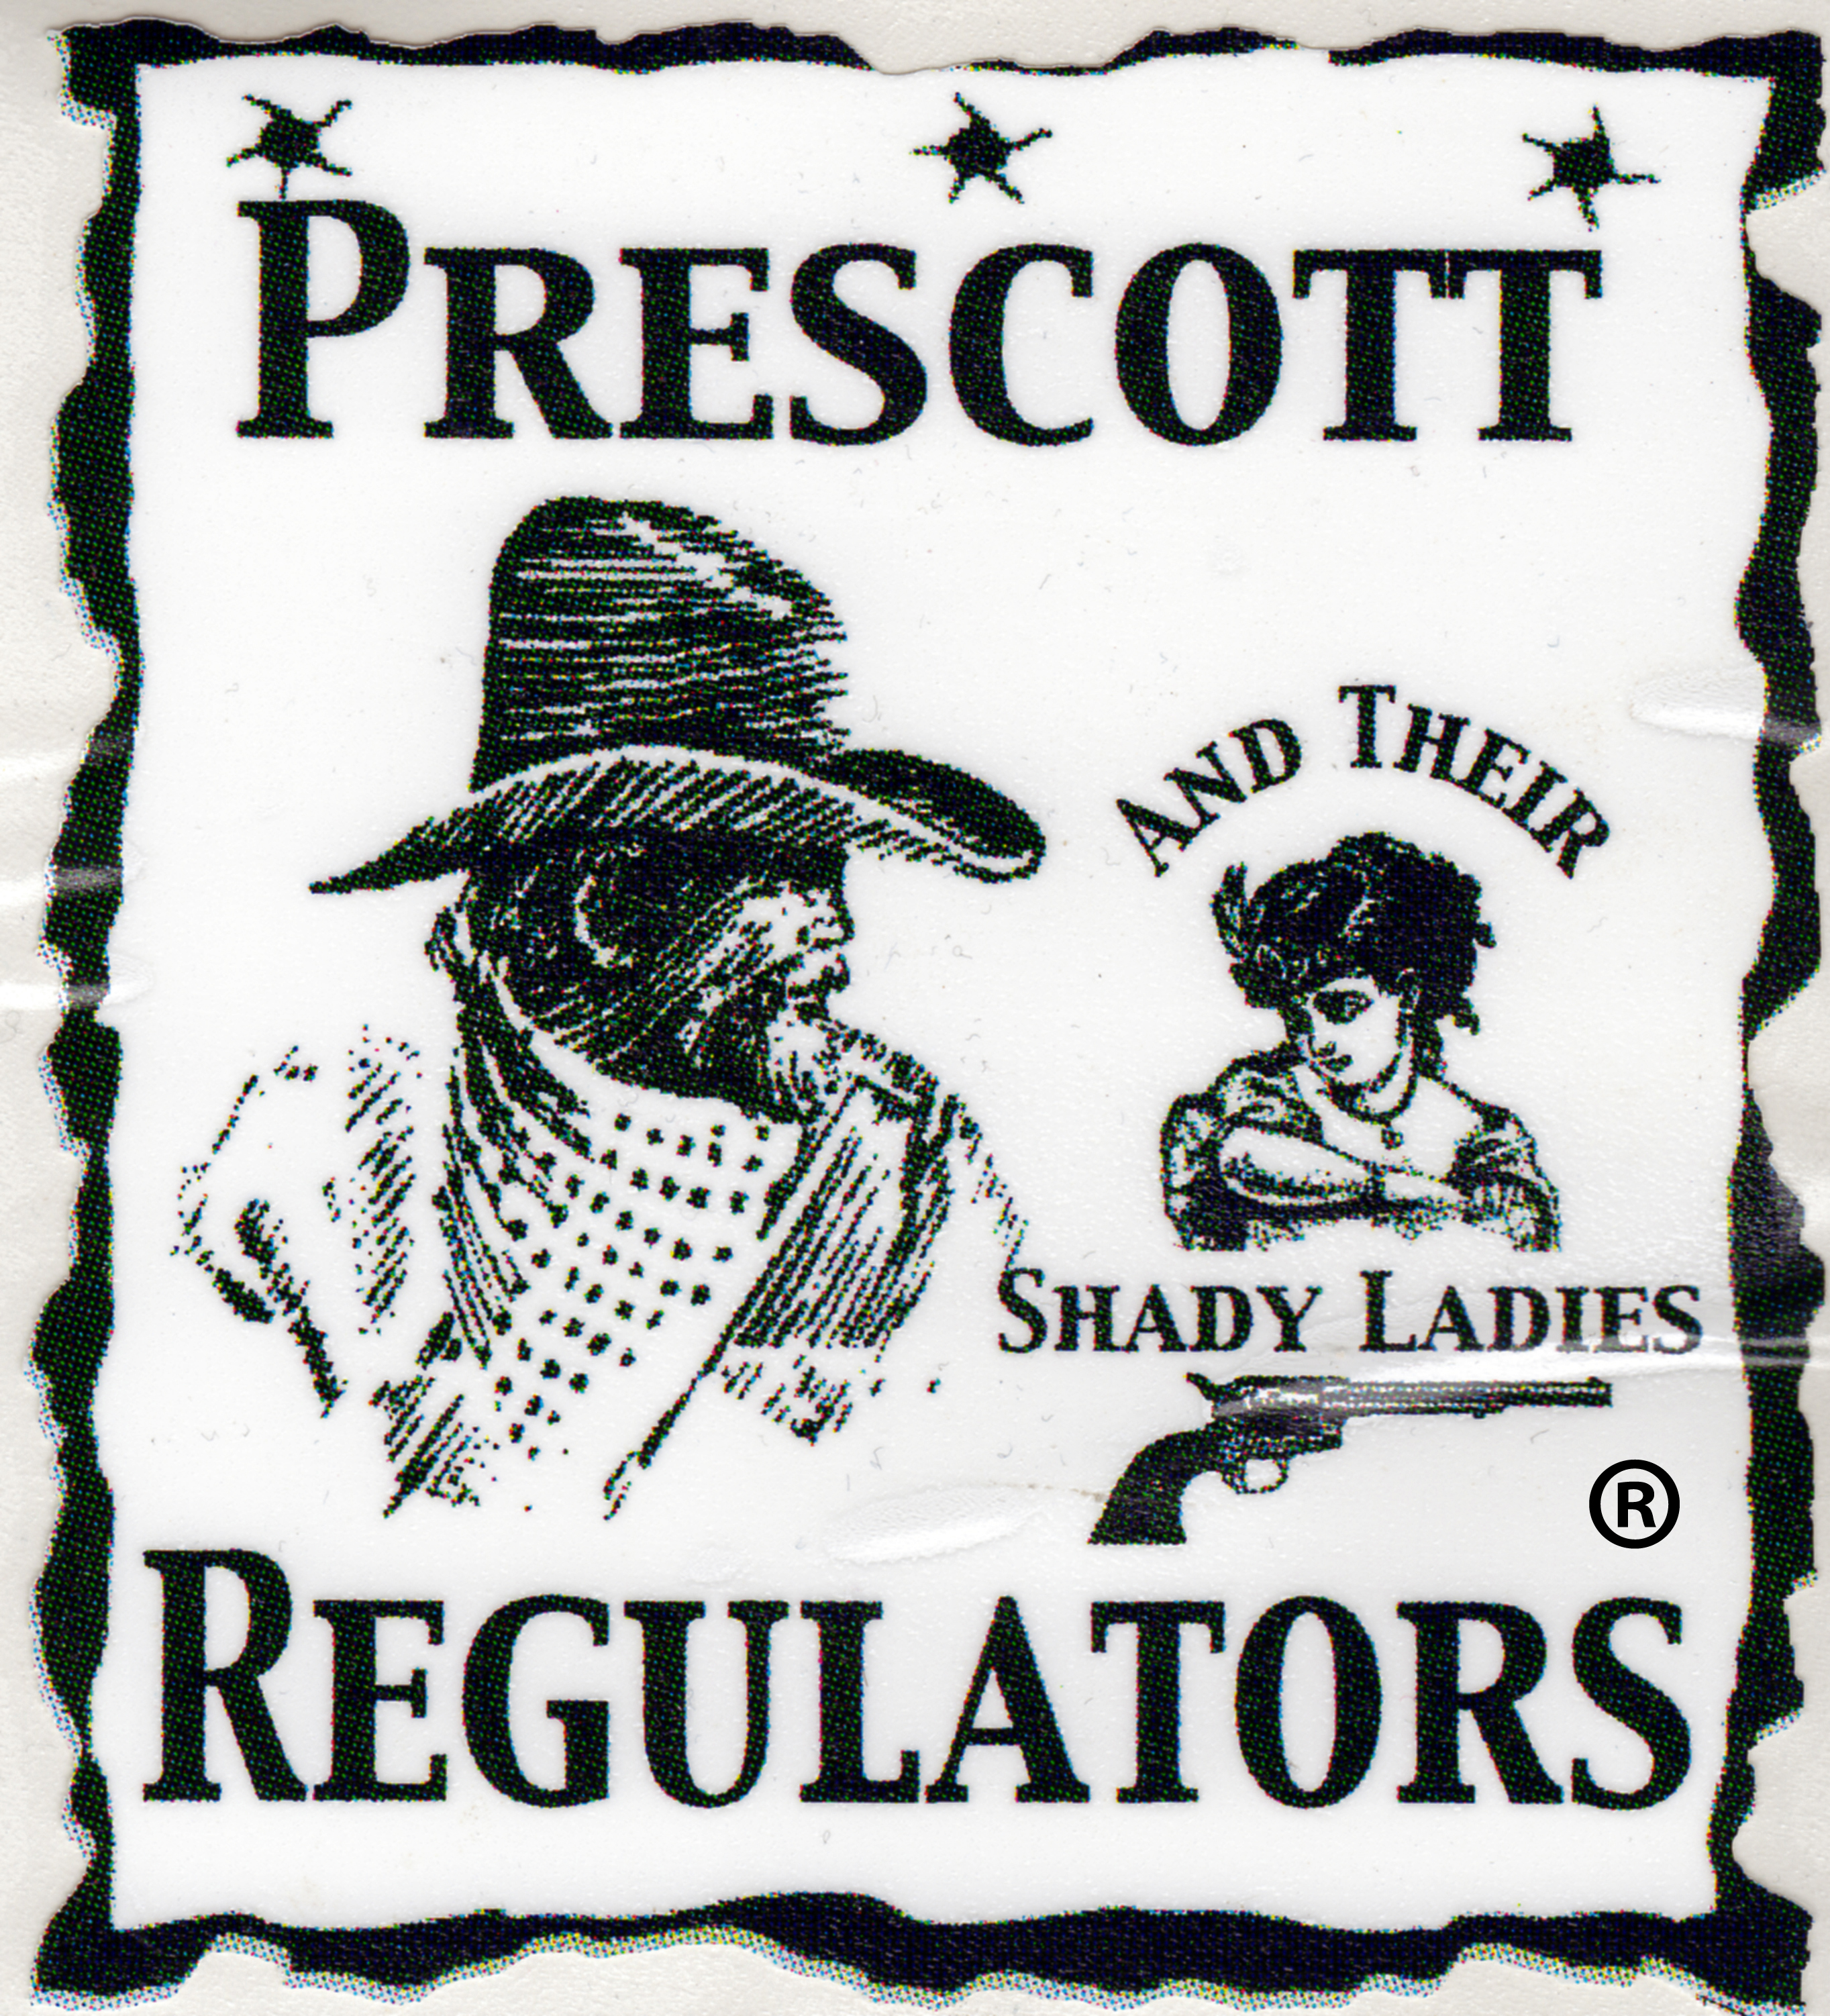 Prescott Regulators & Their Shady Ladies, Inc